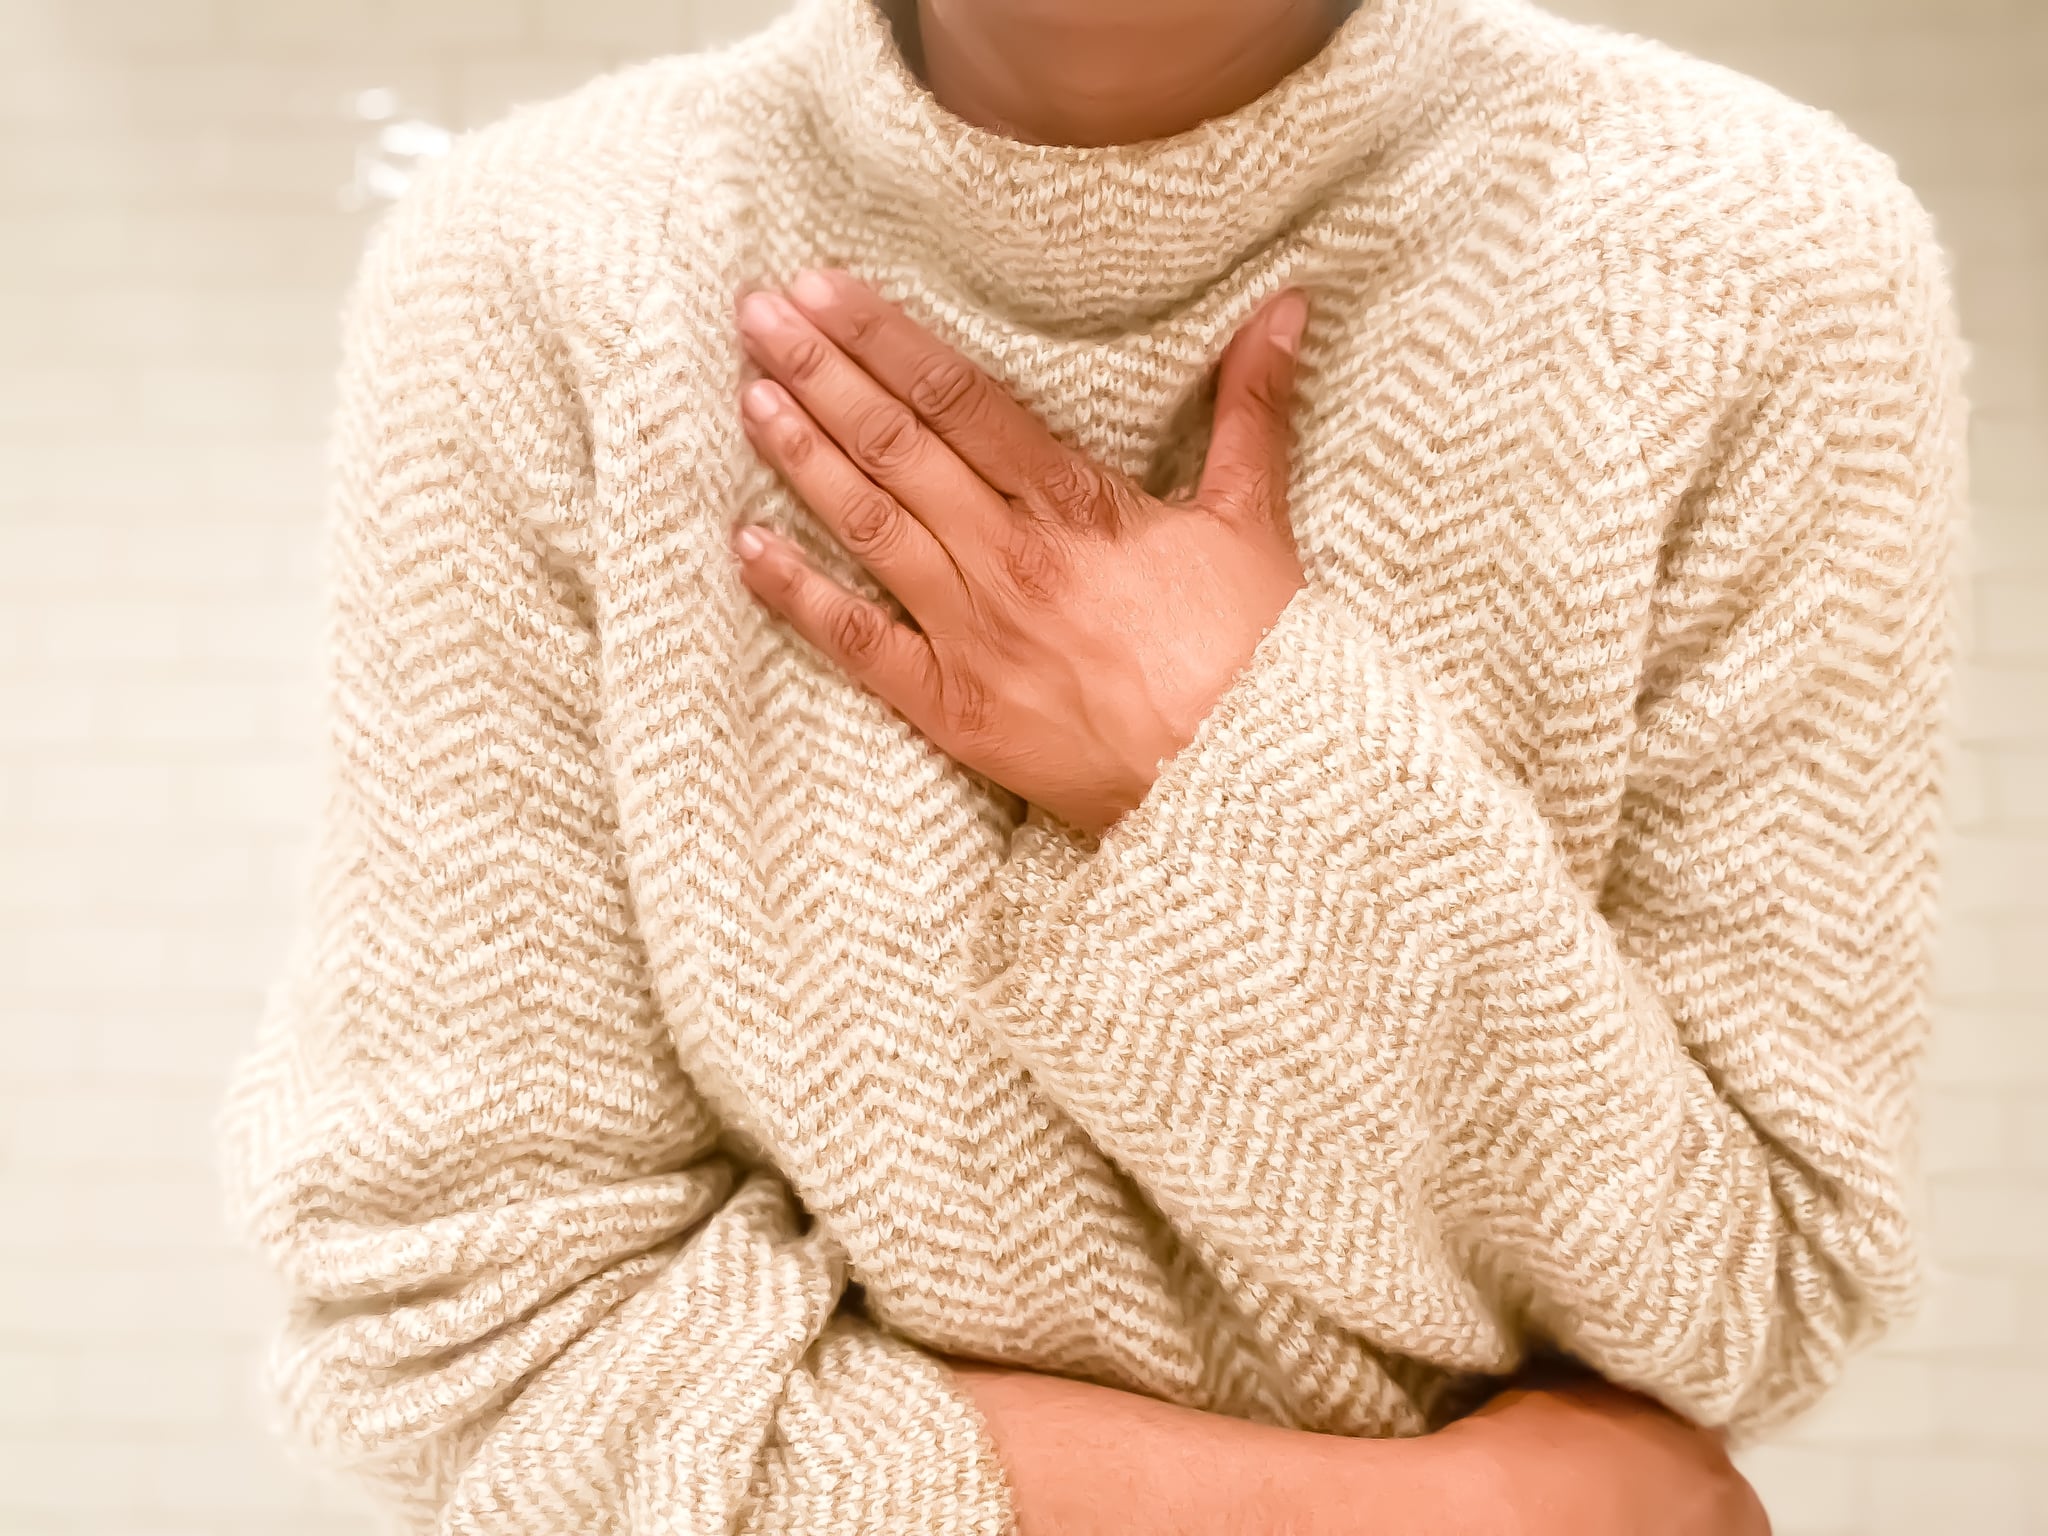 mid adult woman experiences symptom of shortness of breath